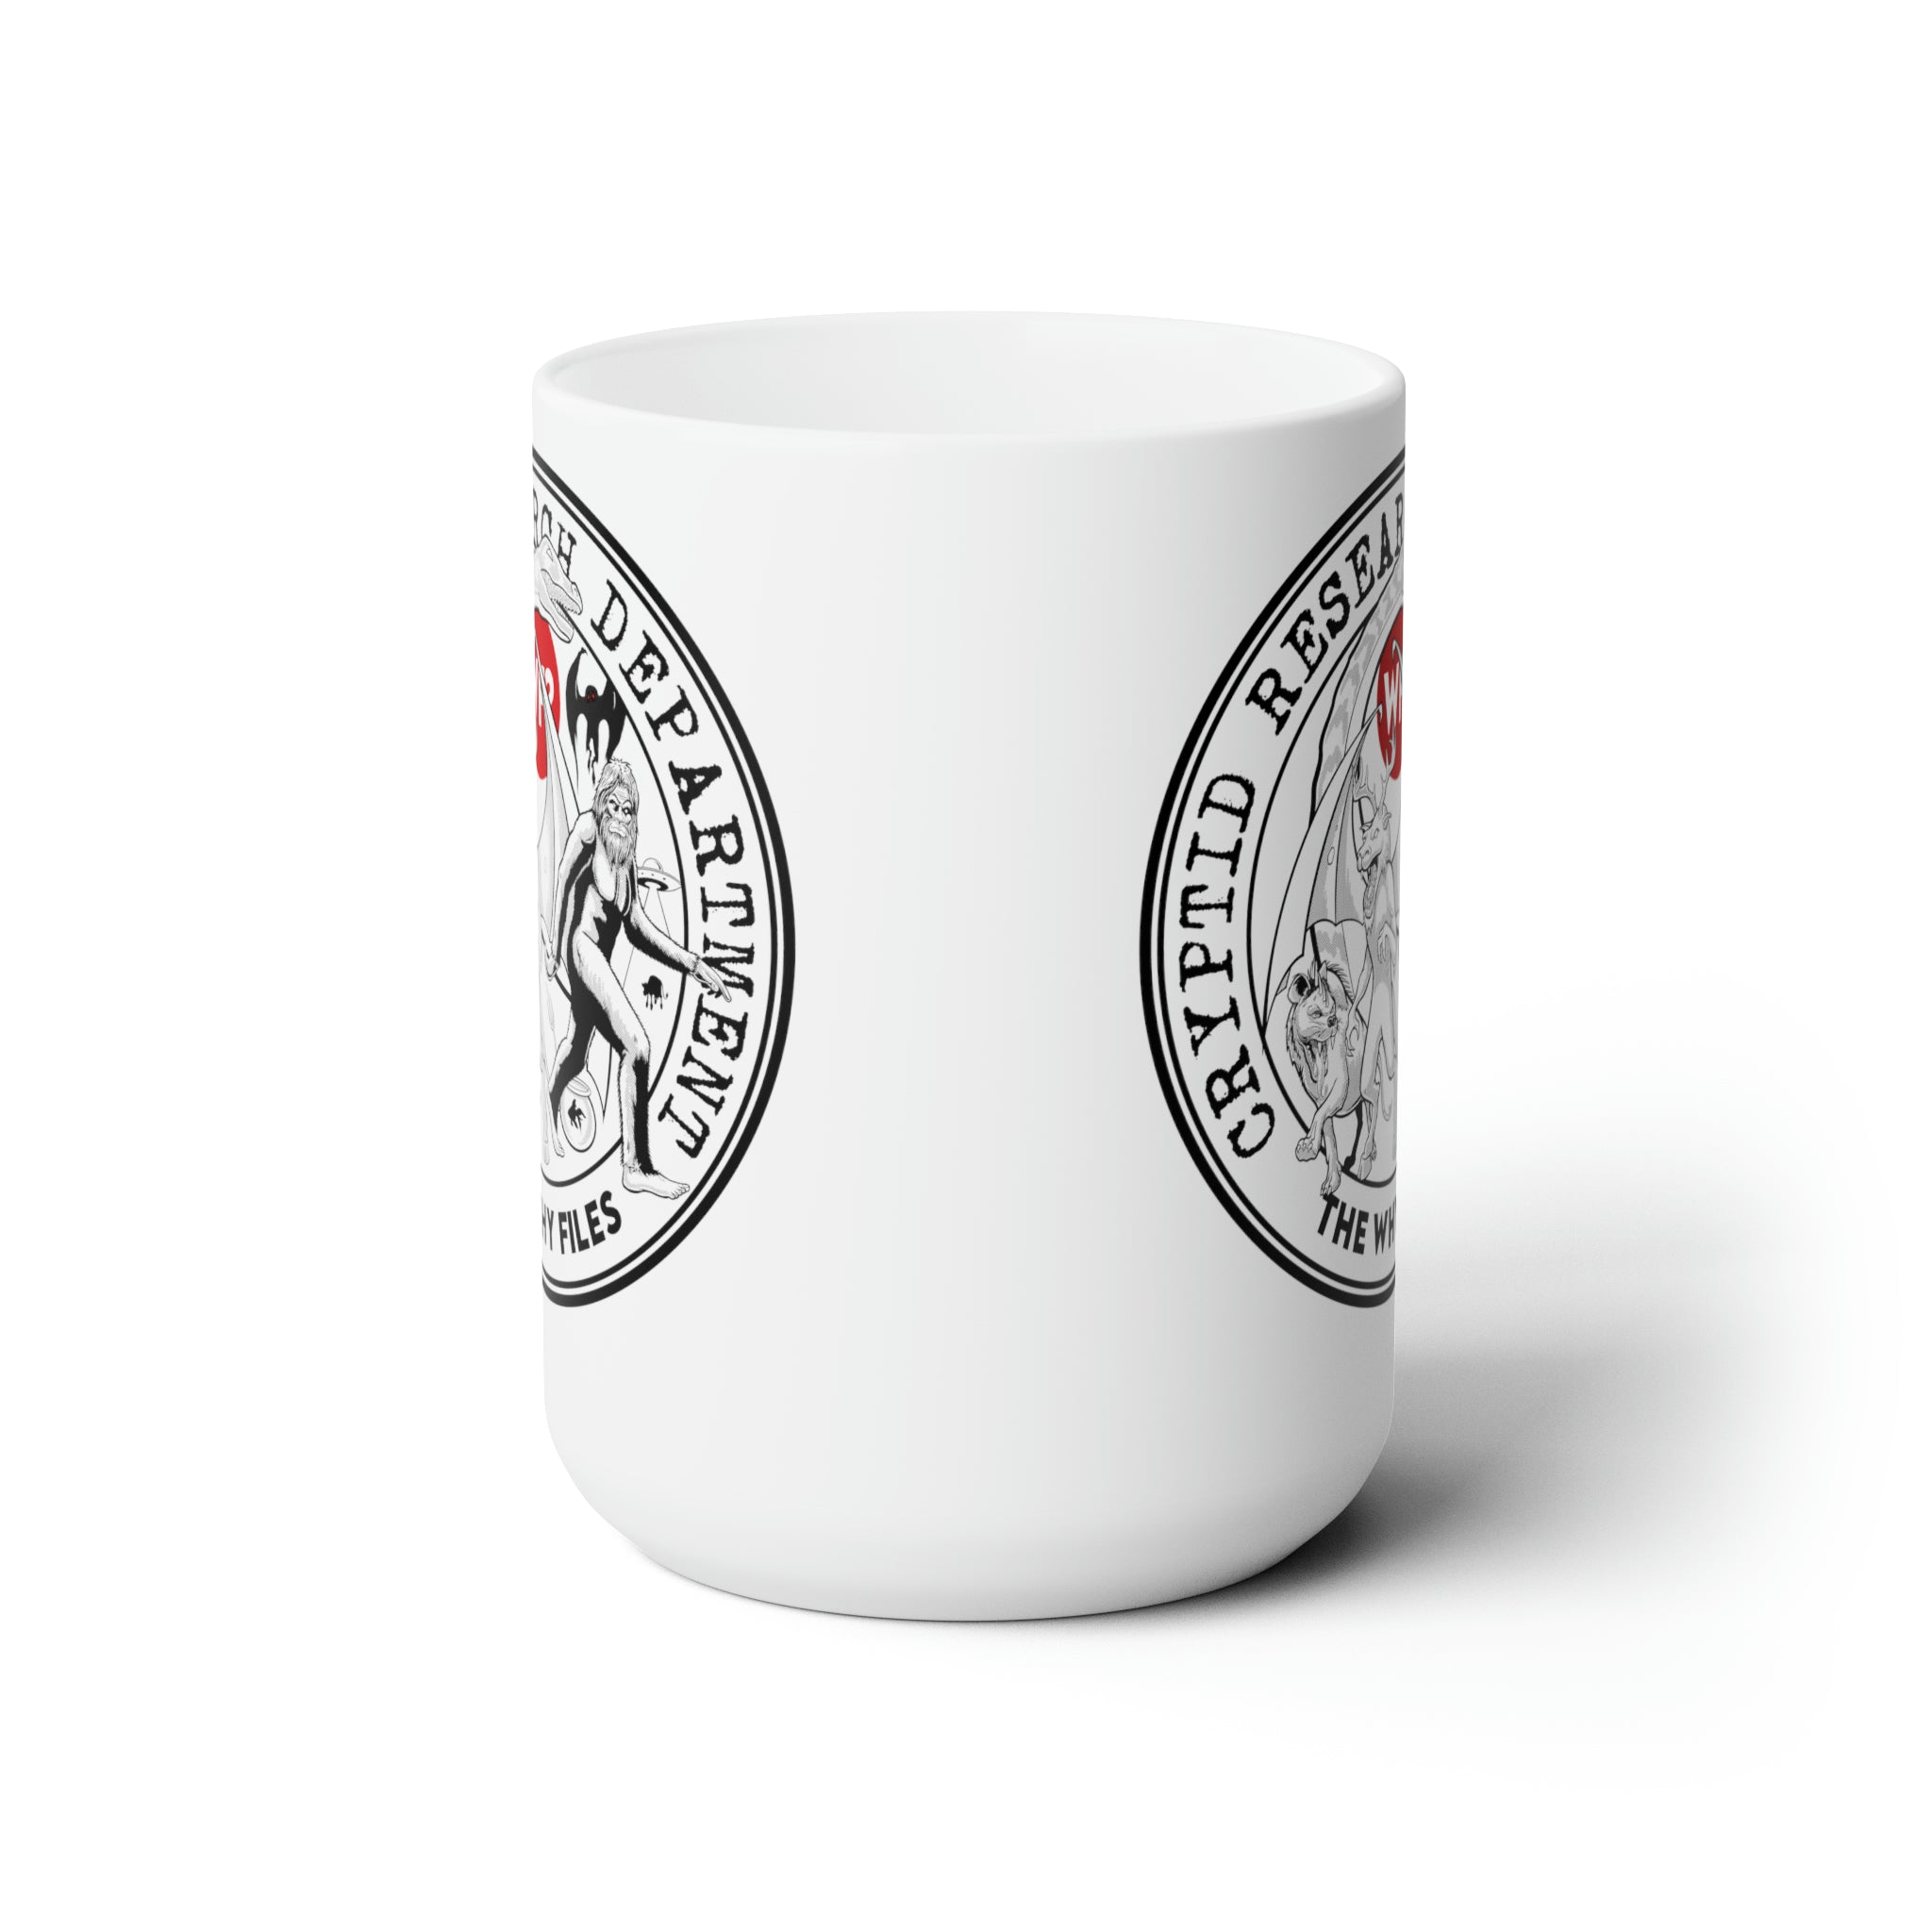 3/2 Cryptids Limited Edition Ceramic Mug 15oz - 0